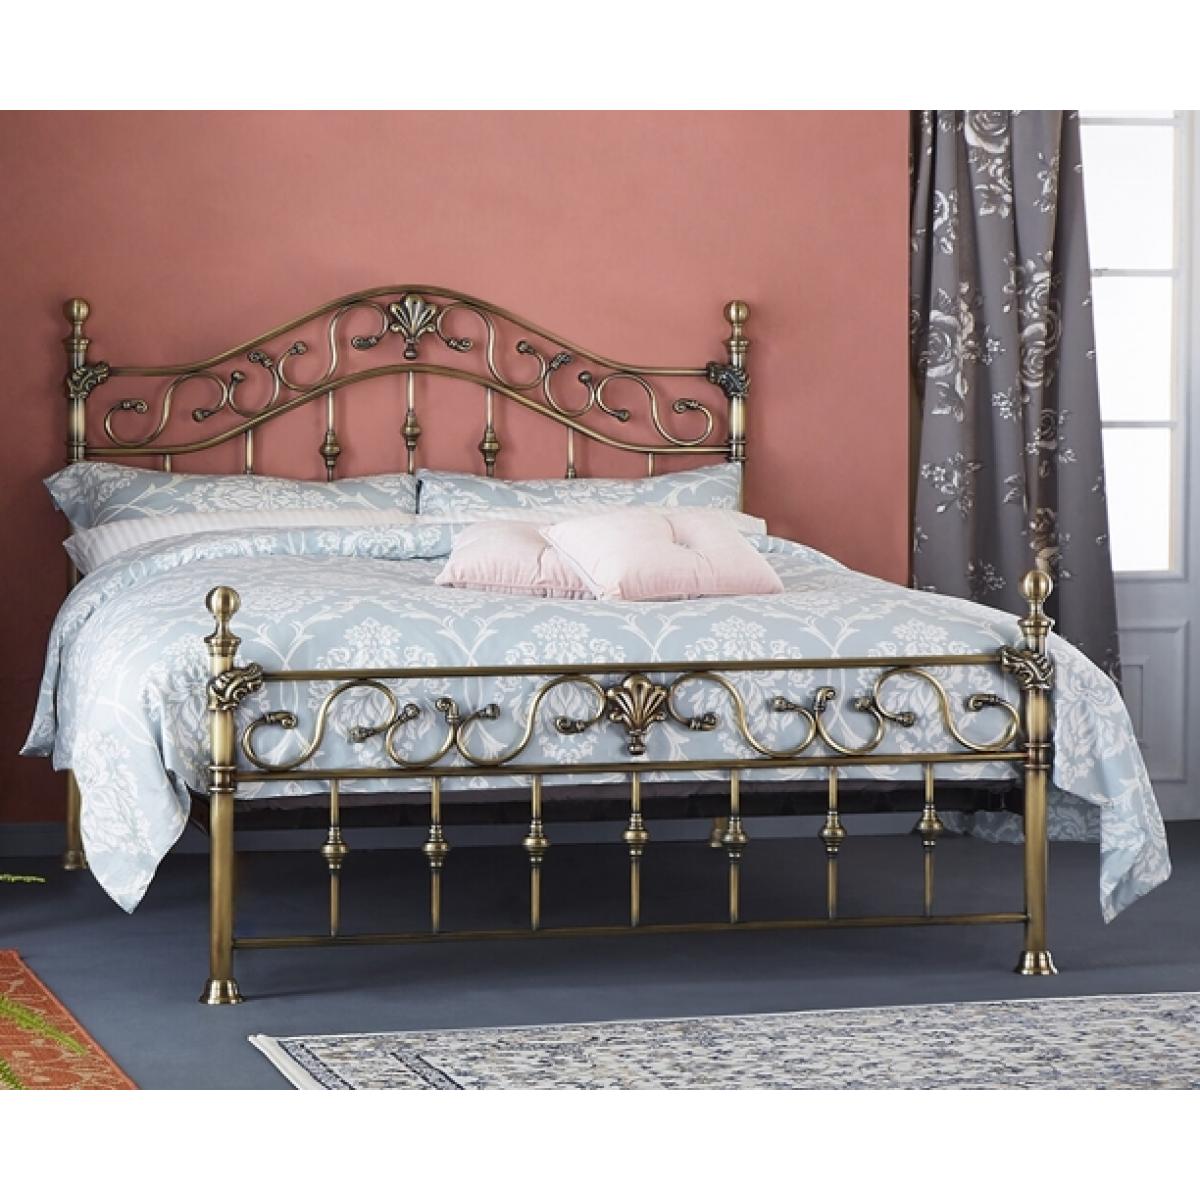 Ridgeway Ornate Antique Brass Effect, Ornate Bed Frame